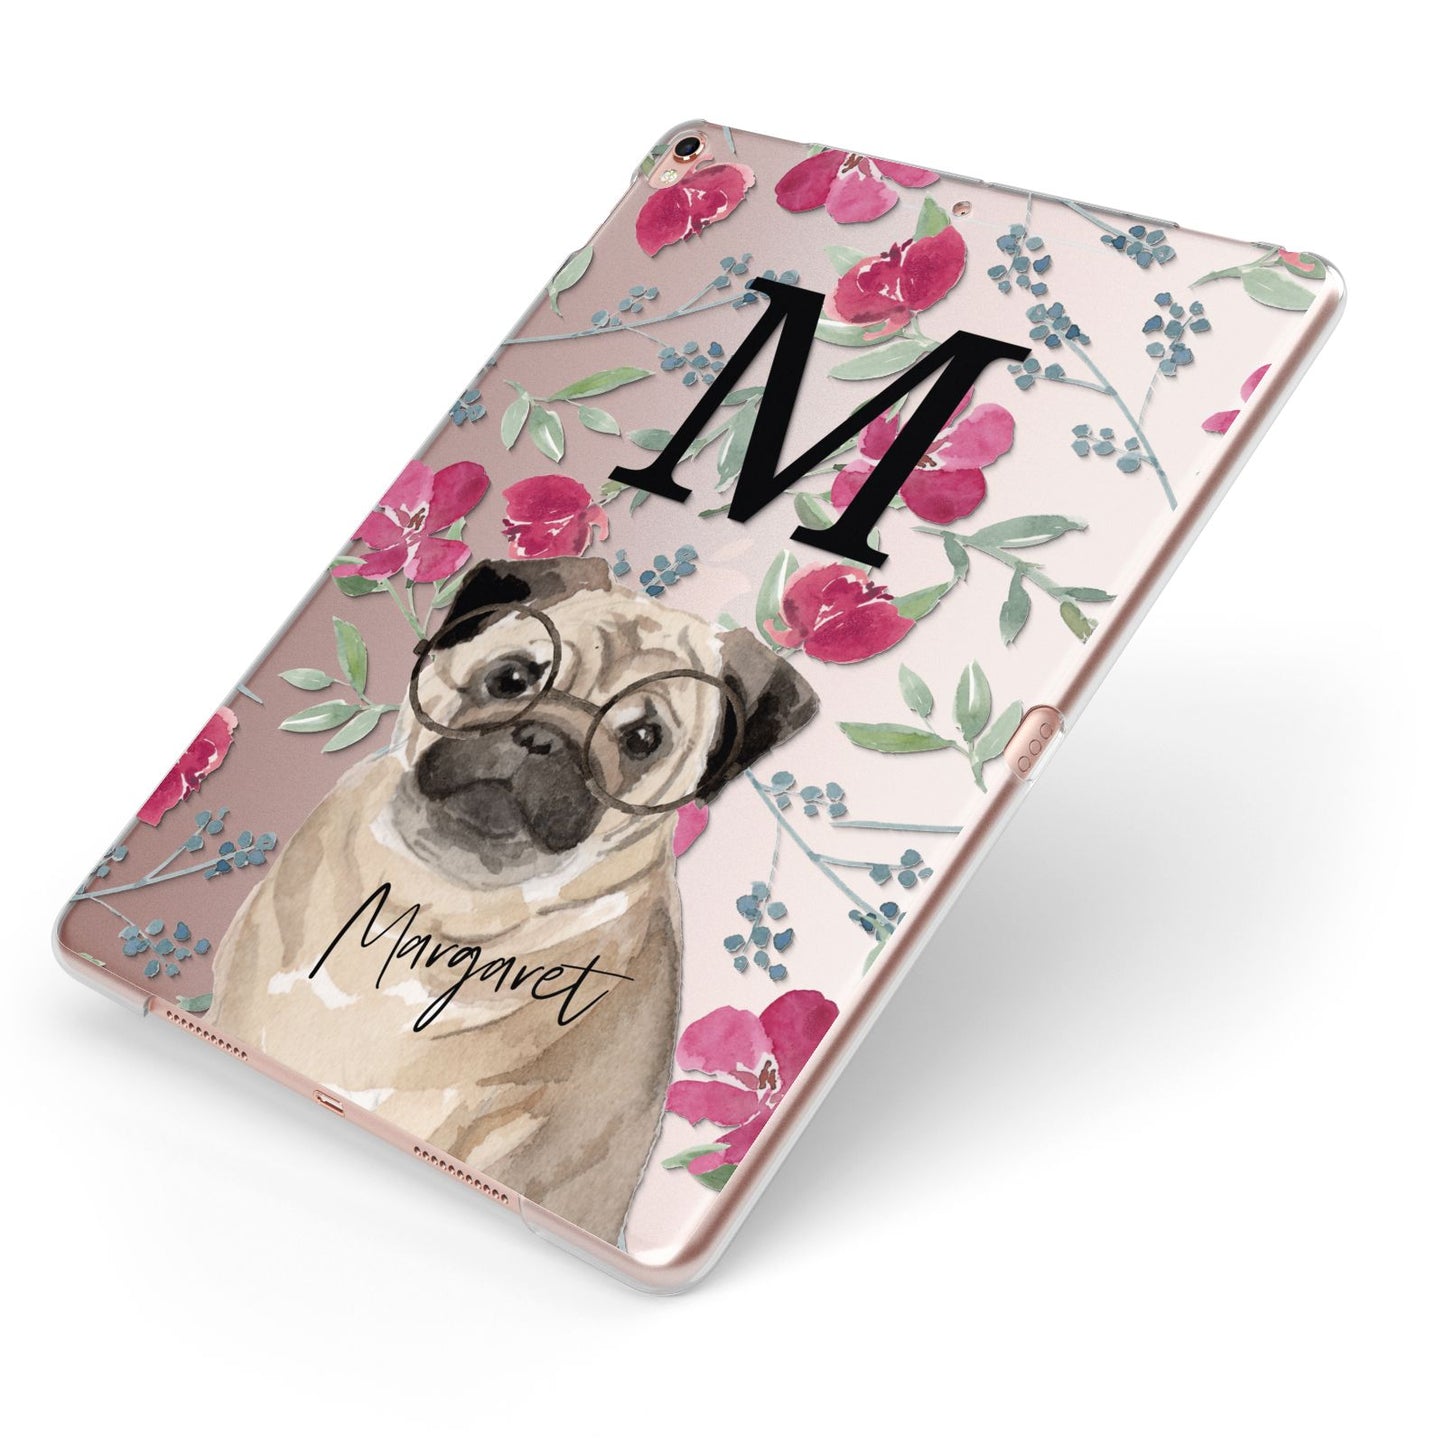 Personalised Pug Dog Apple iPad Case on Rose Gold iPad Side View